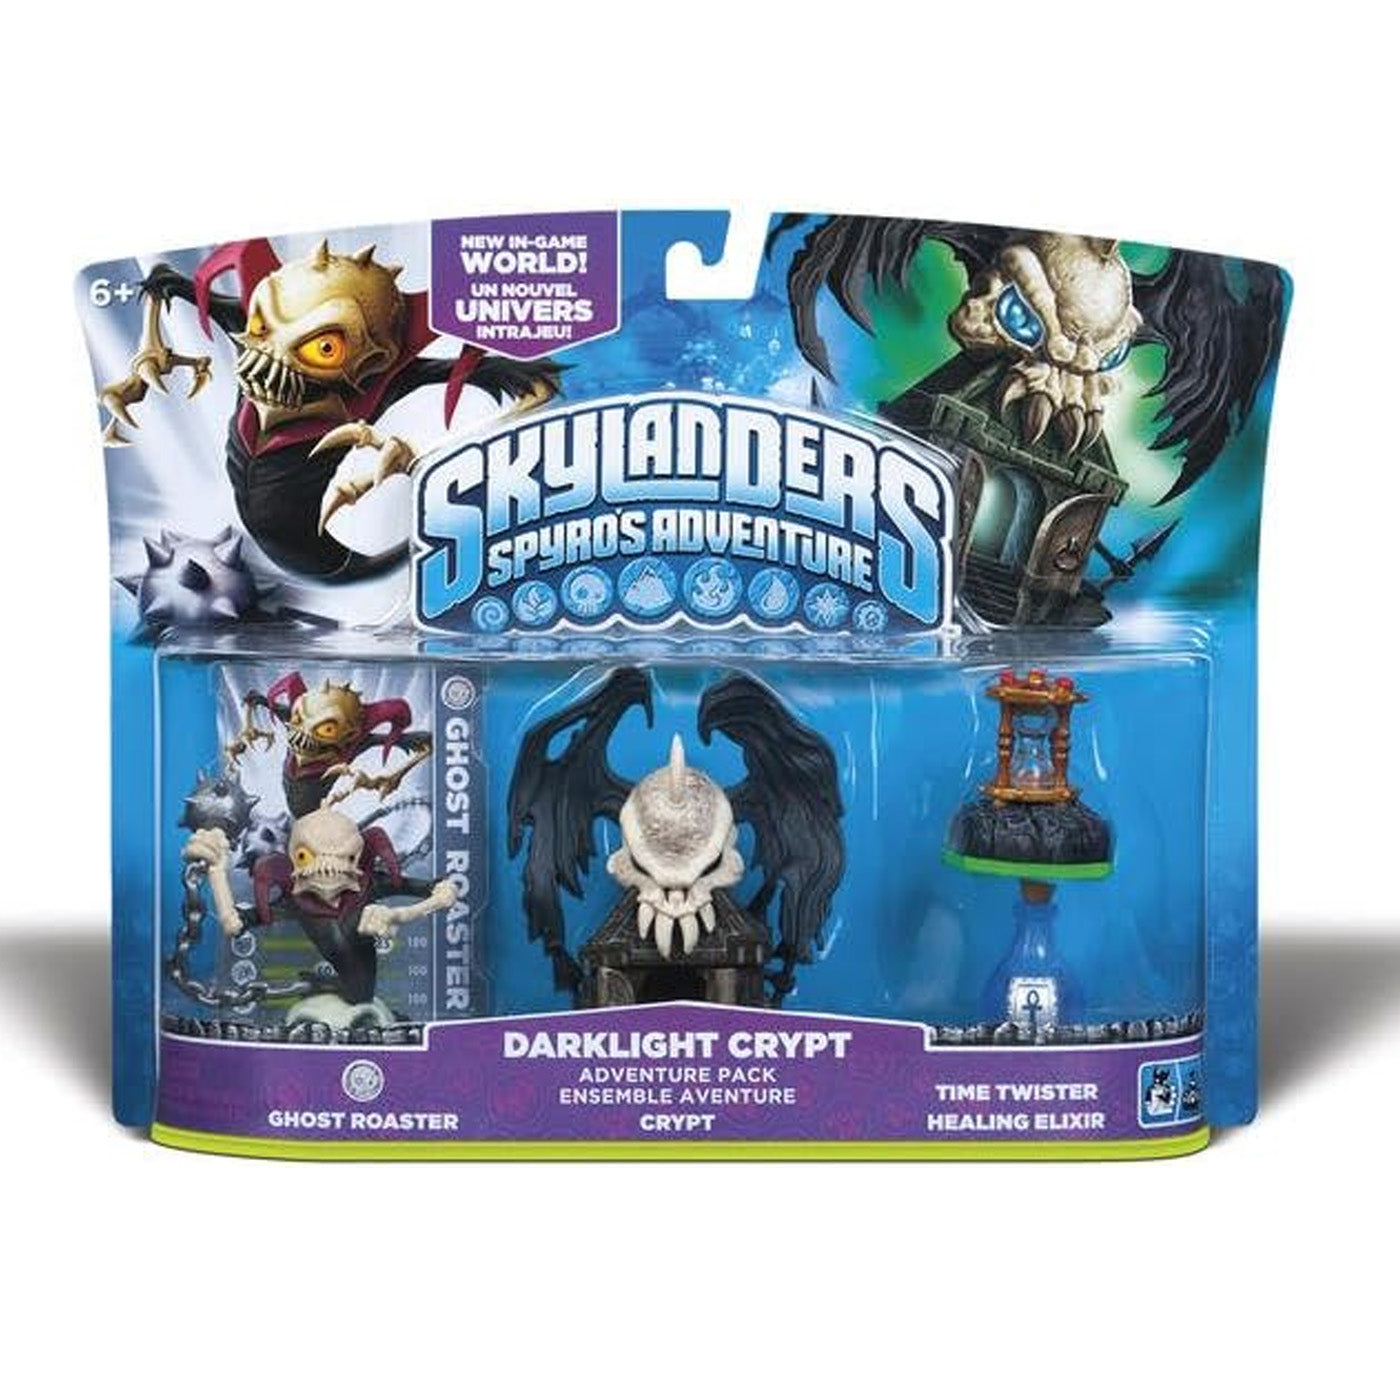 Skylanders Spyro's Adventure Pack: Darklight Crypt